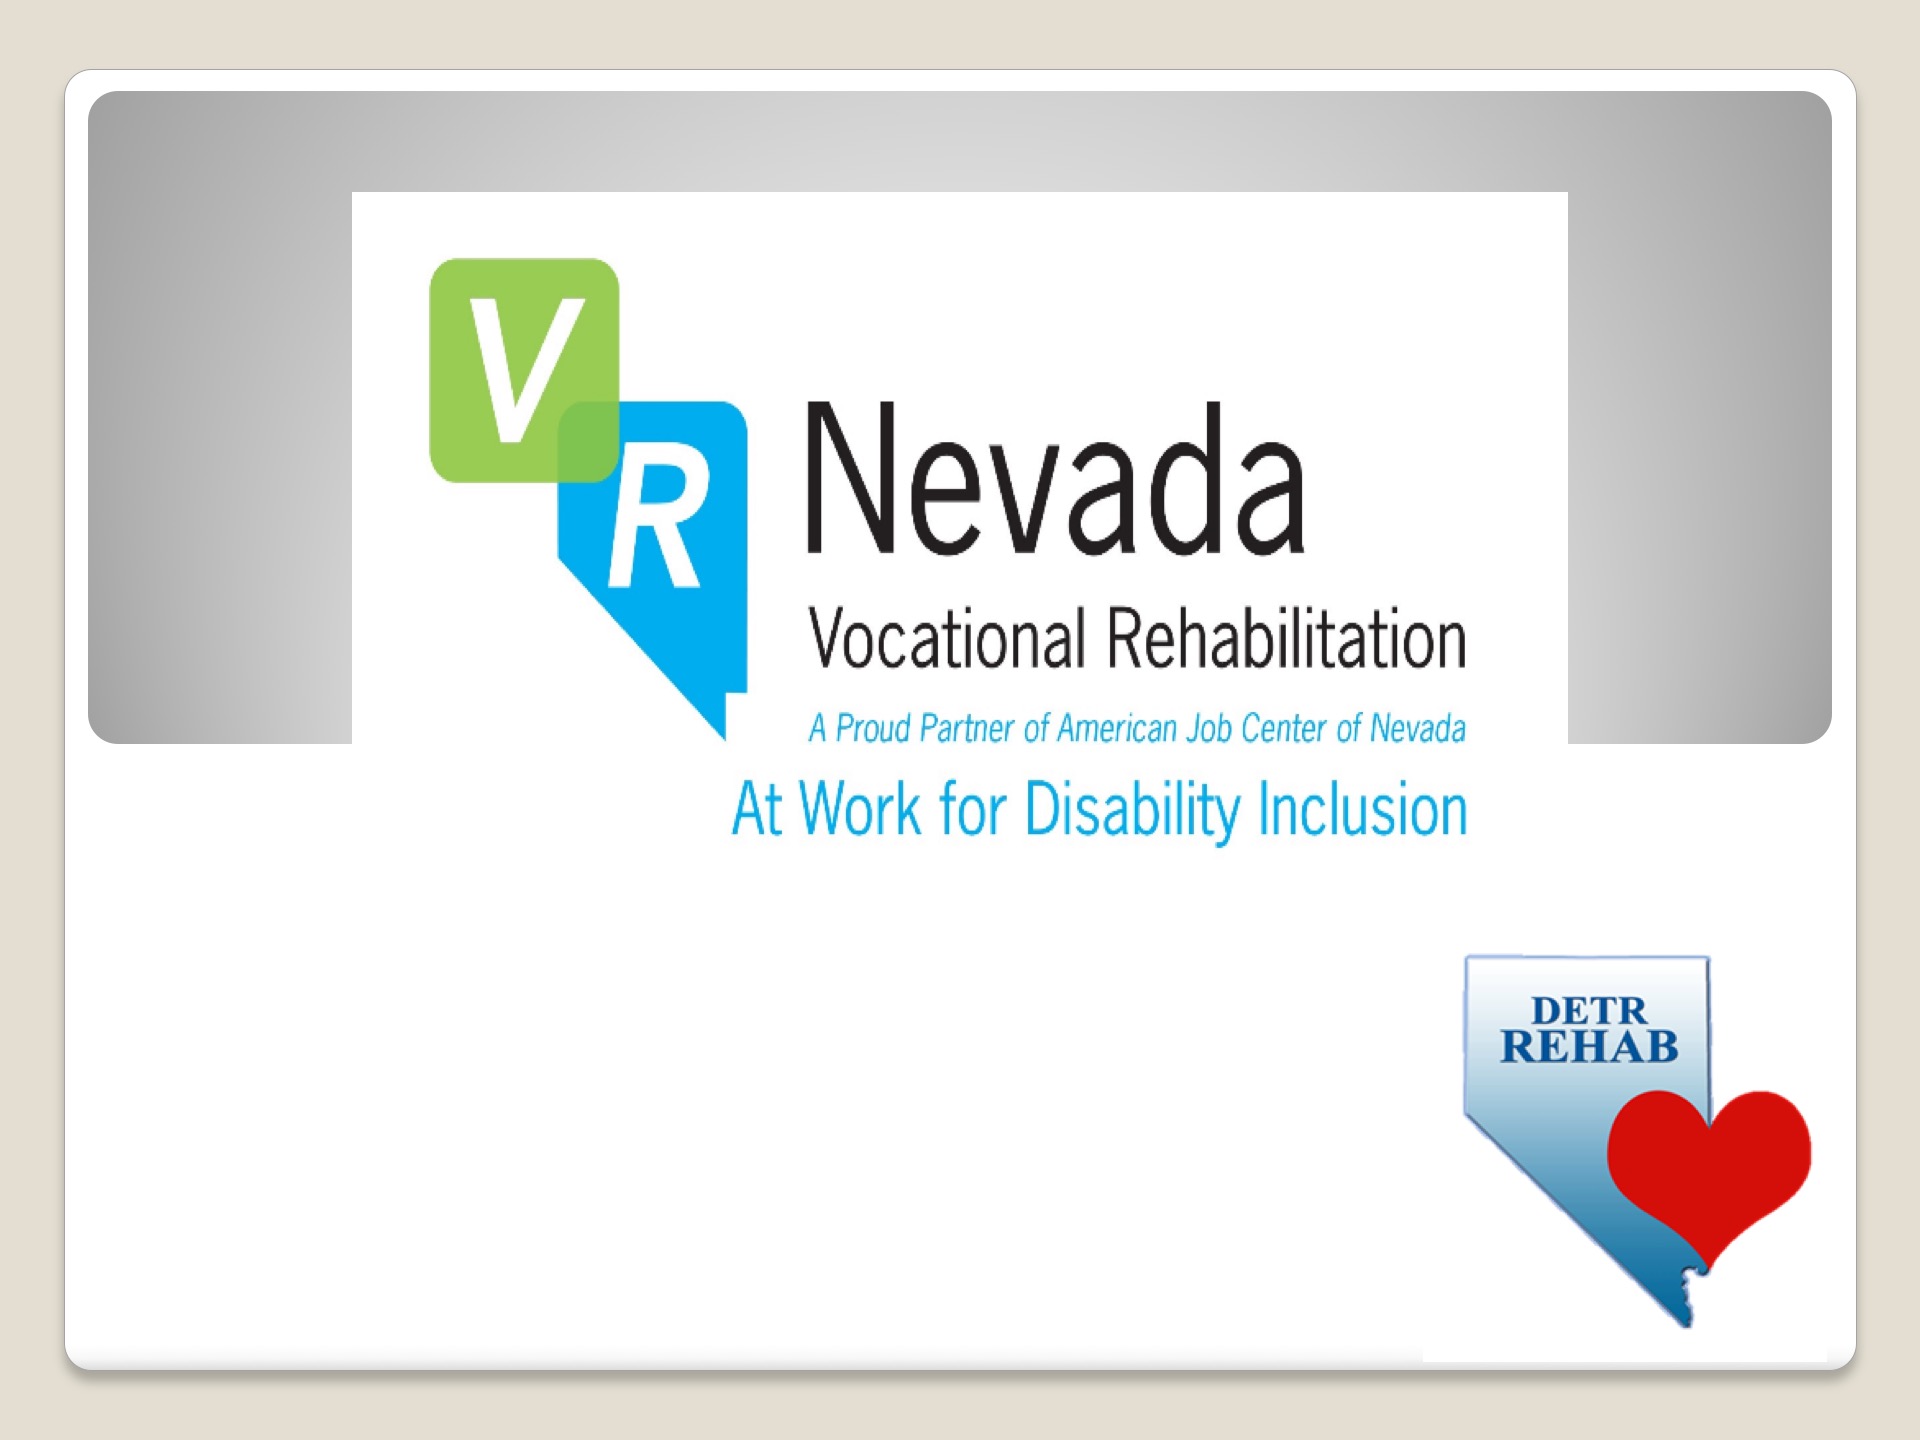 Nevada Vocational Rehabilitation